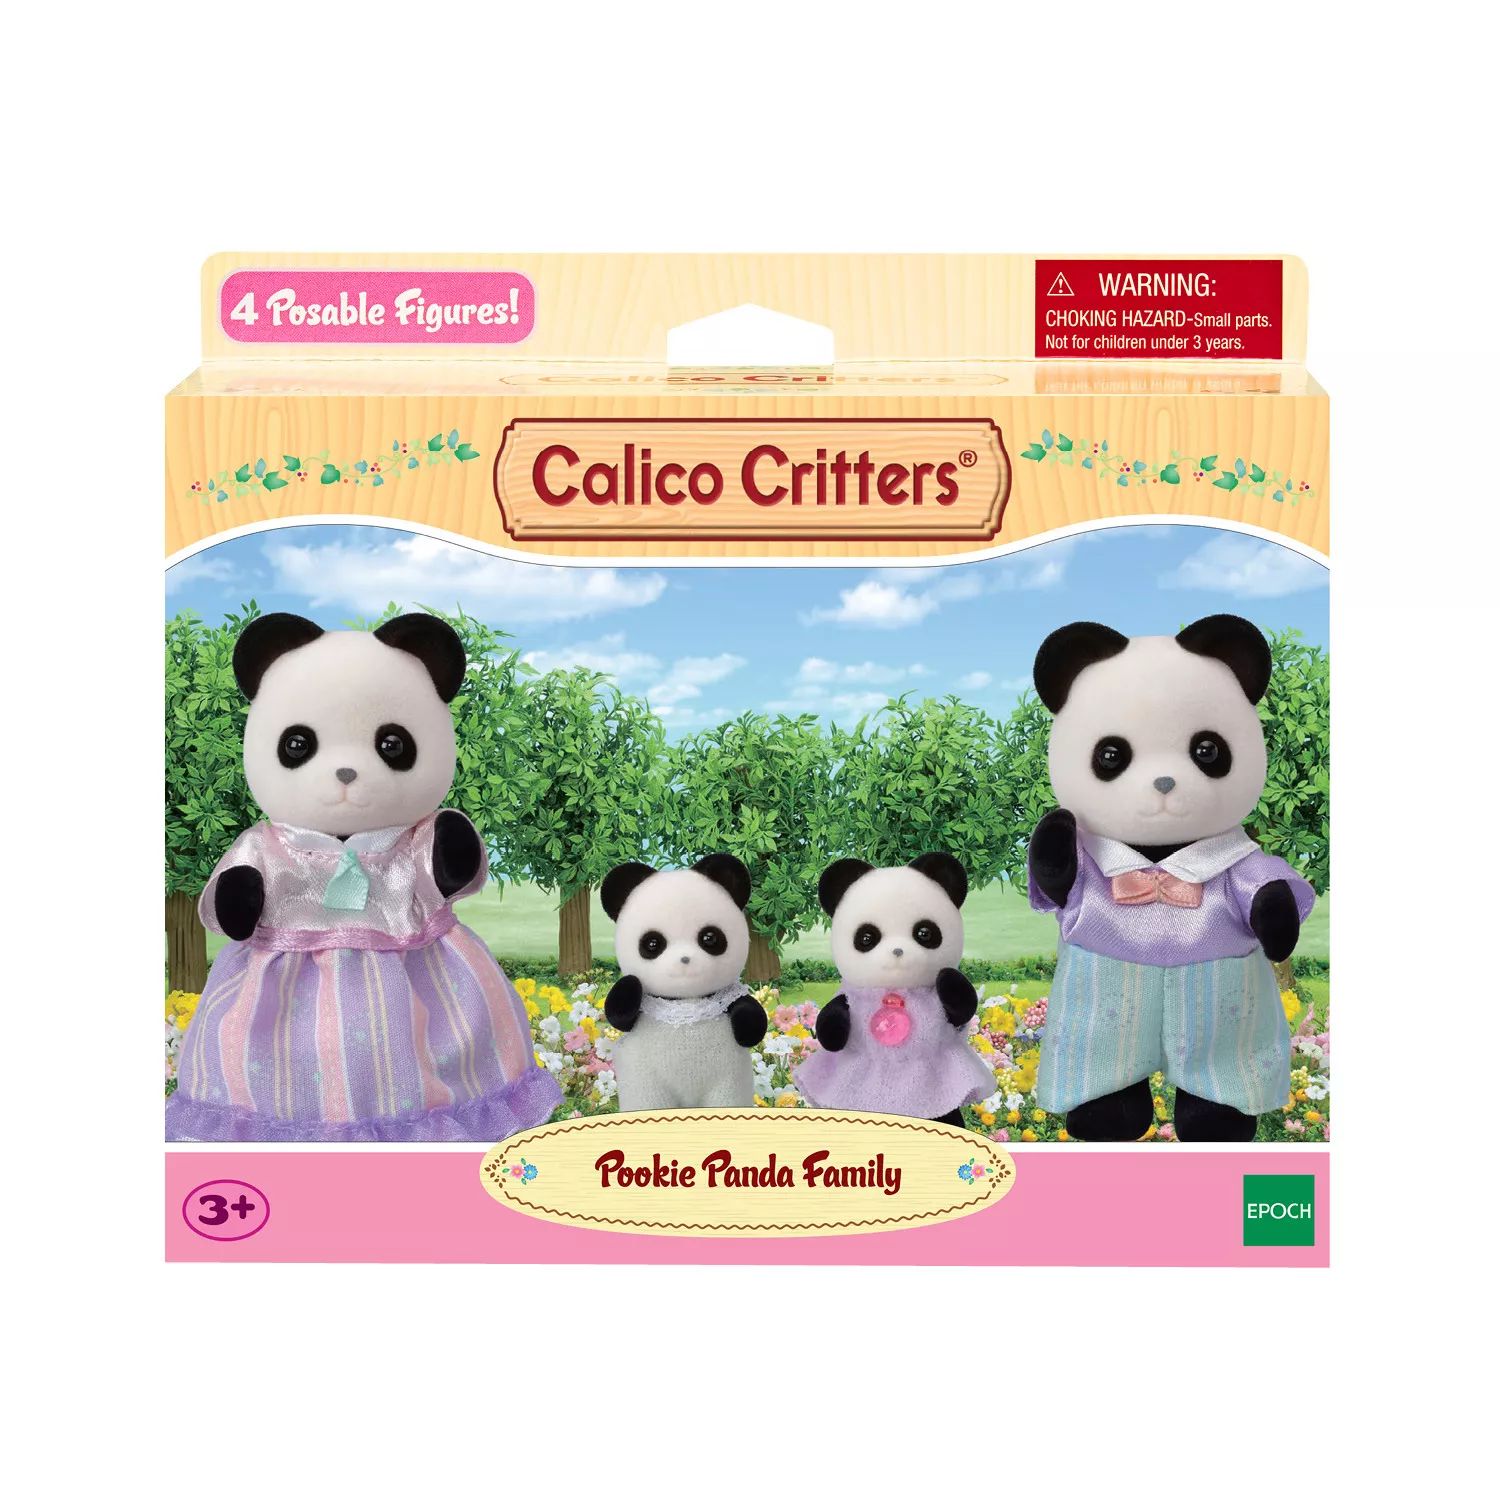 Семейный набор Calico Critters Pookie Panda из 4 коллекционных фигурок кукол Calico Critters